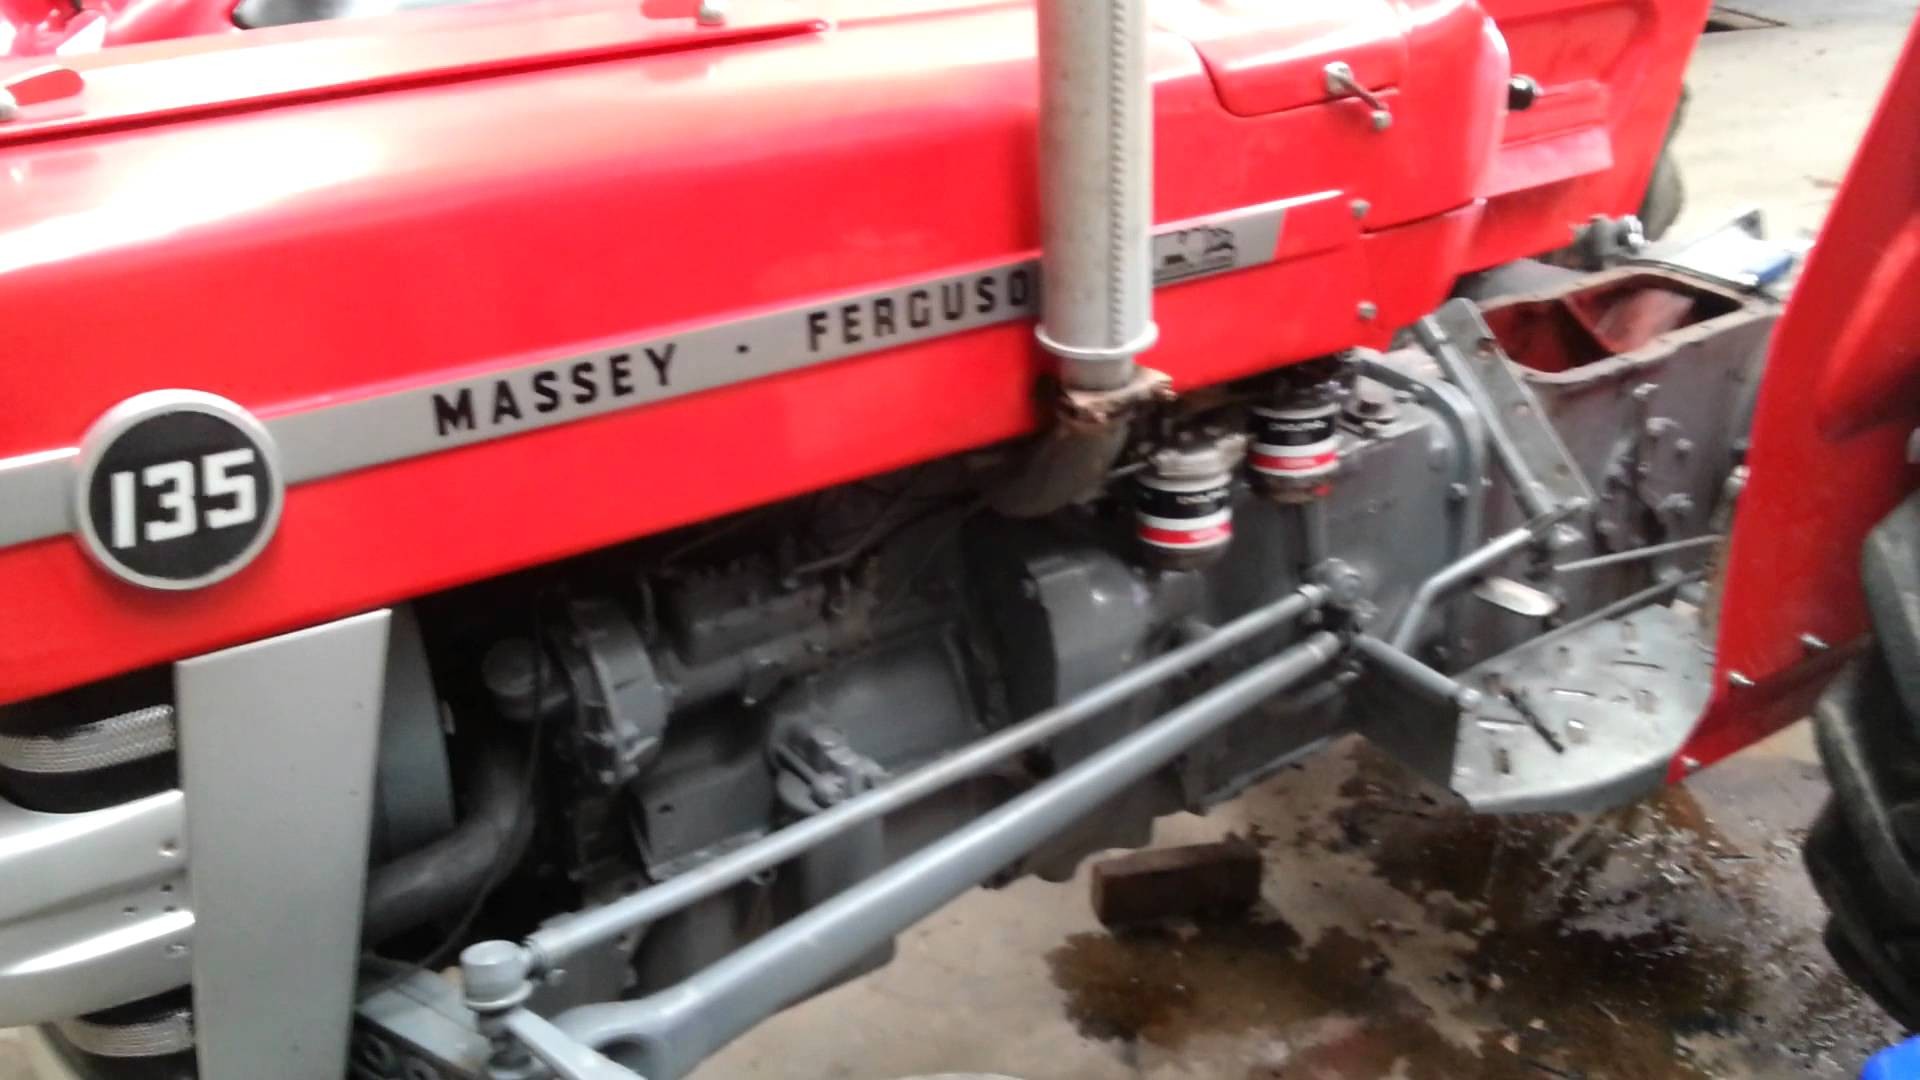 Massey Ferguson 135 Engine Diagram Massey Ferguson 135 Lift Cover Removal Of Massey Ferguson 135 Engine Diagram